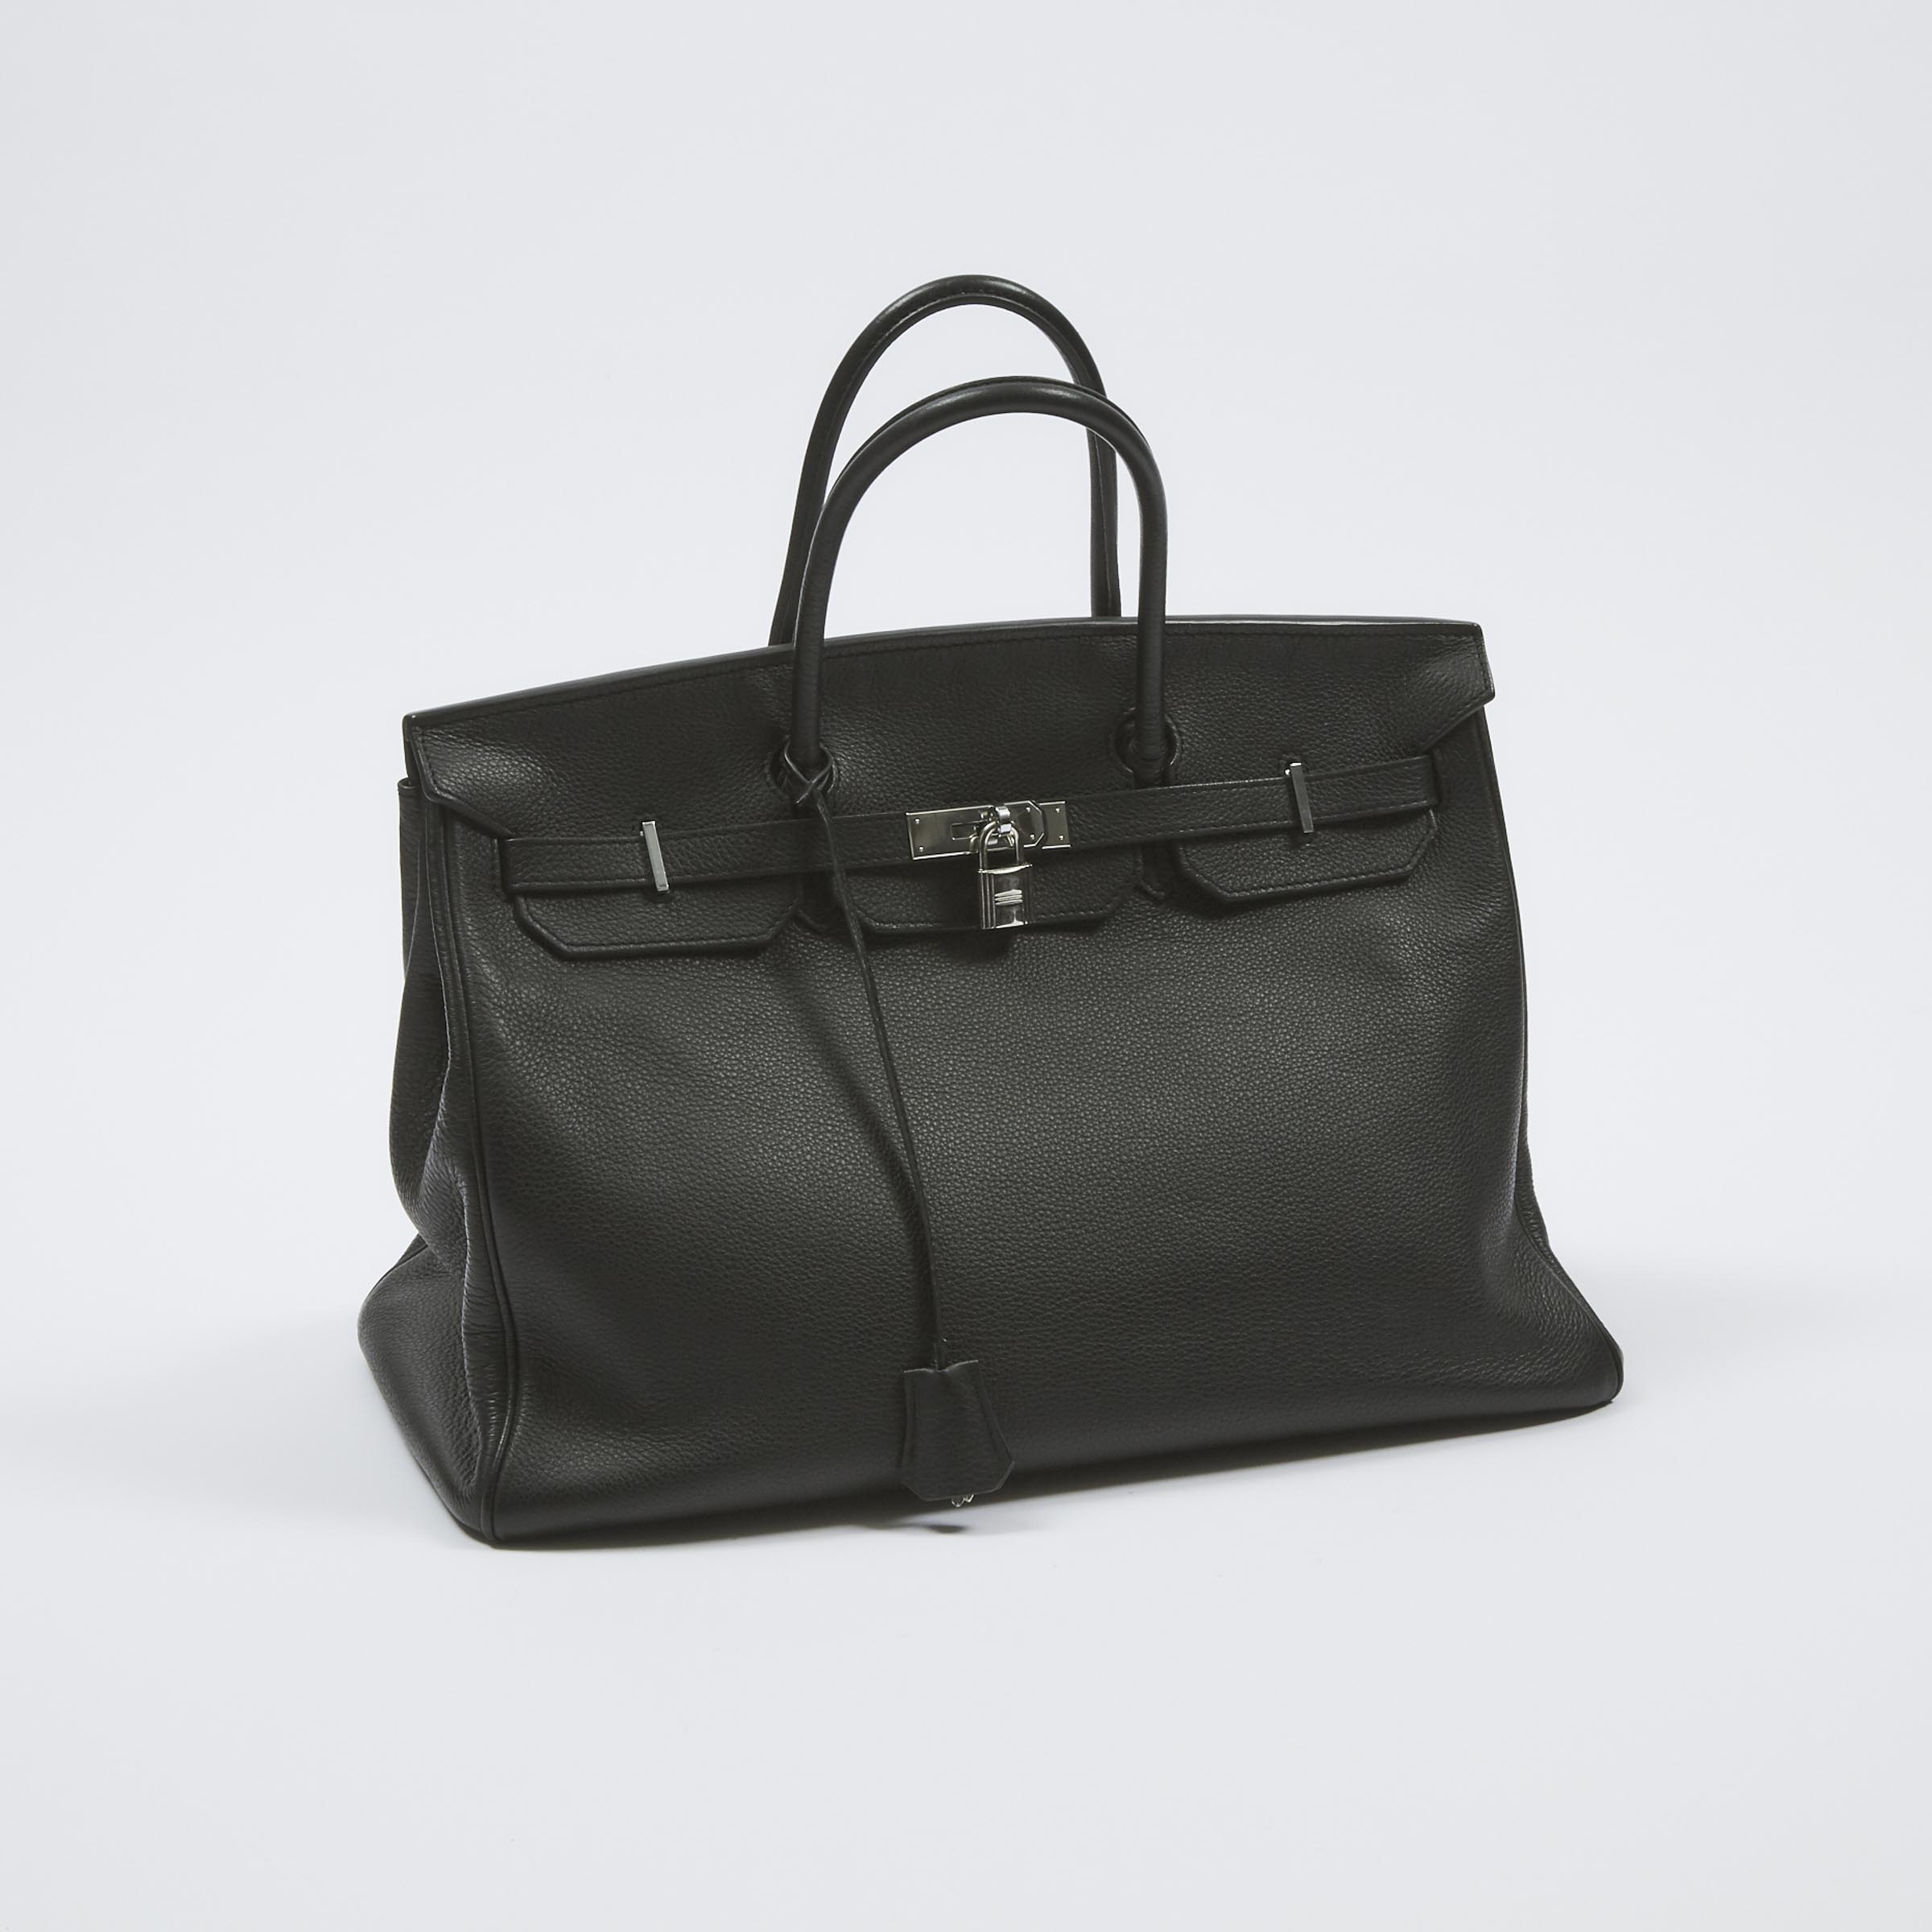 Hermès Birkin Black Togo 40 Leather Handbag